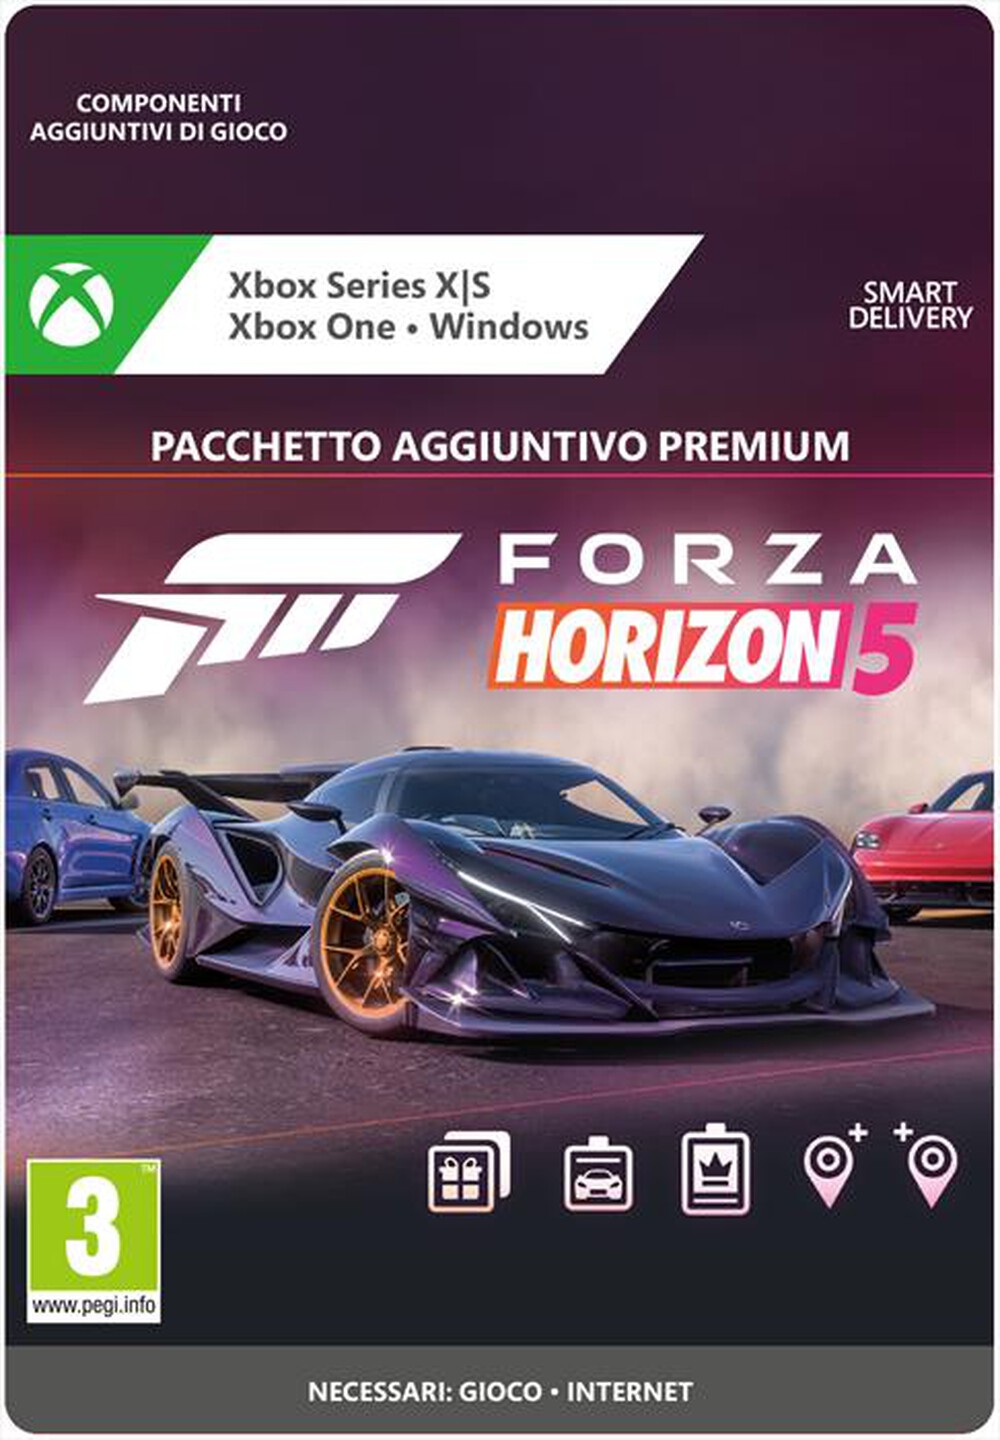 "MICROSOFT - Forza Horizon 5: Premium Addons Bundle - "